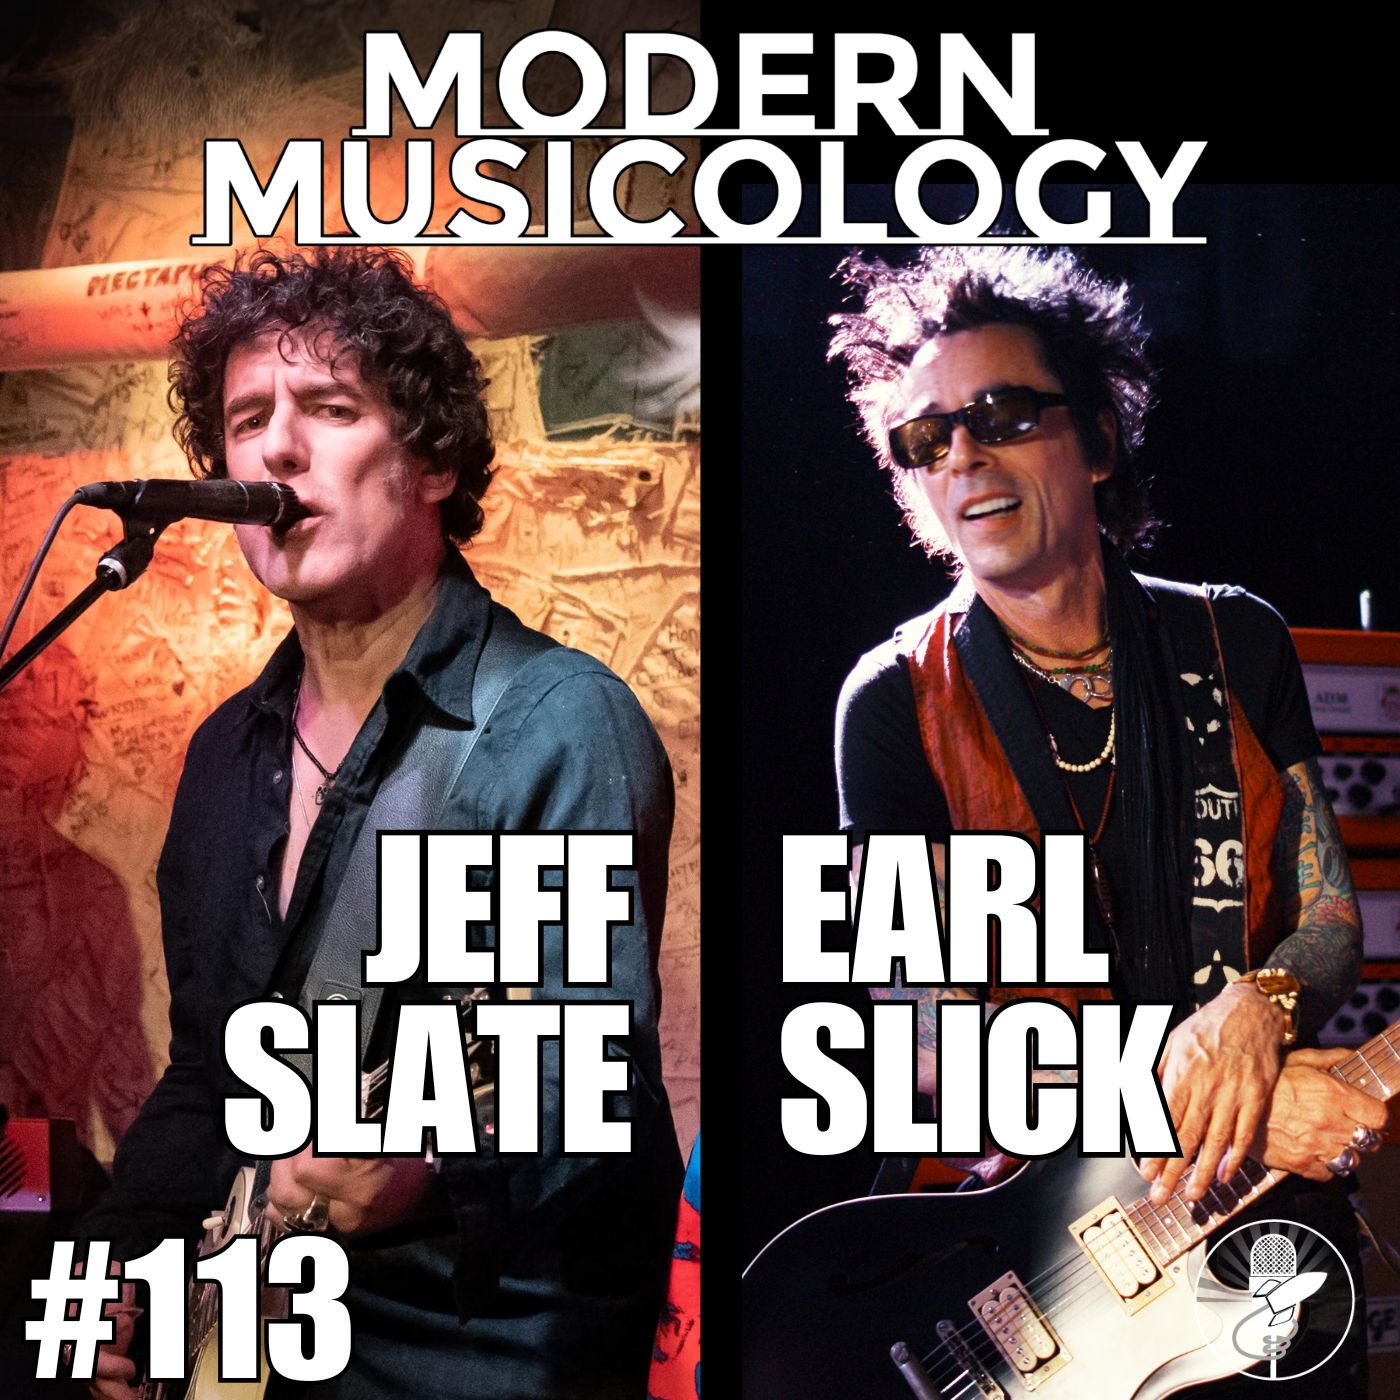 Modern Musicology #113 Jeff Slate and Earl Slick